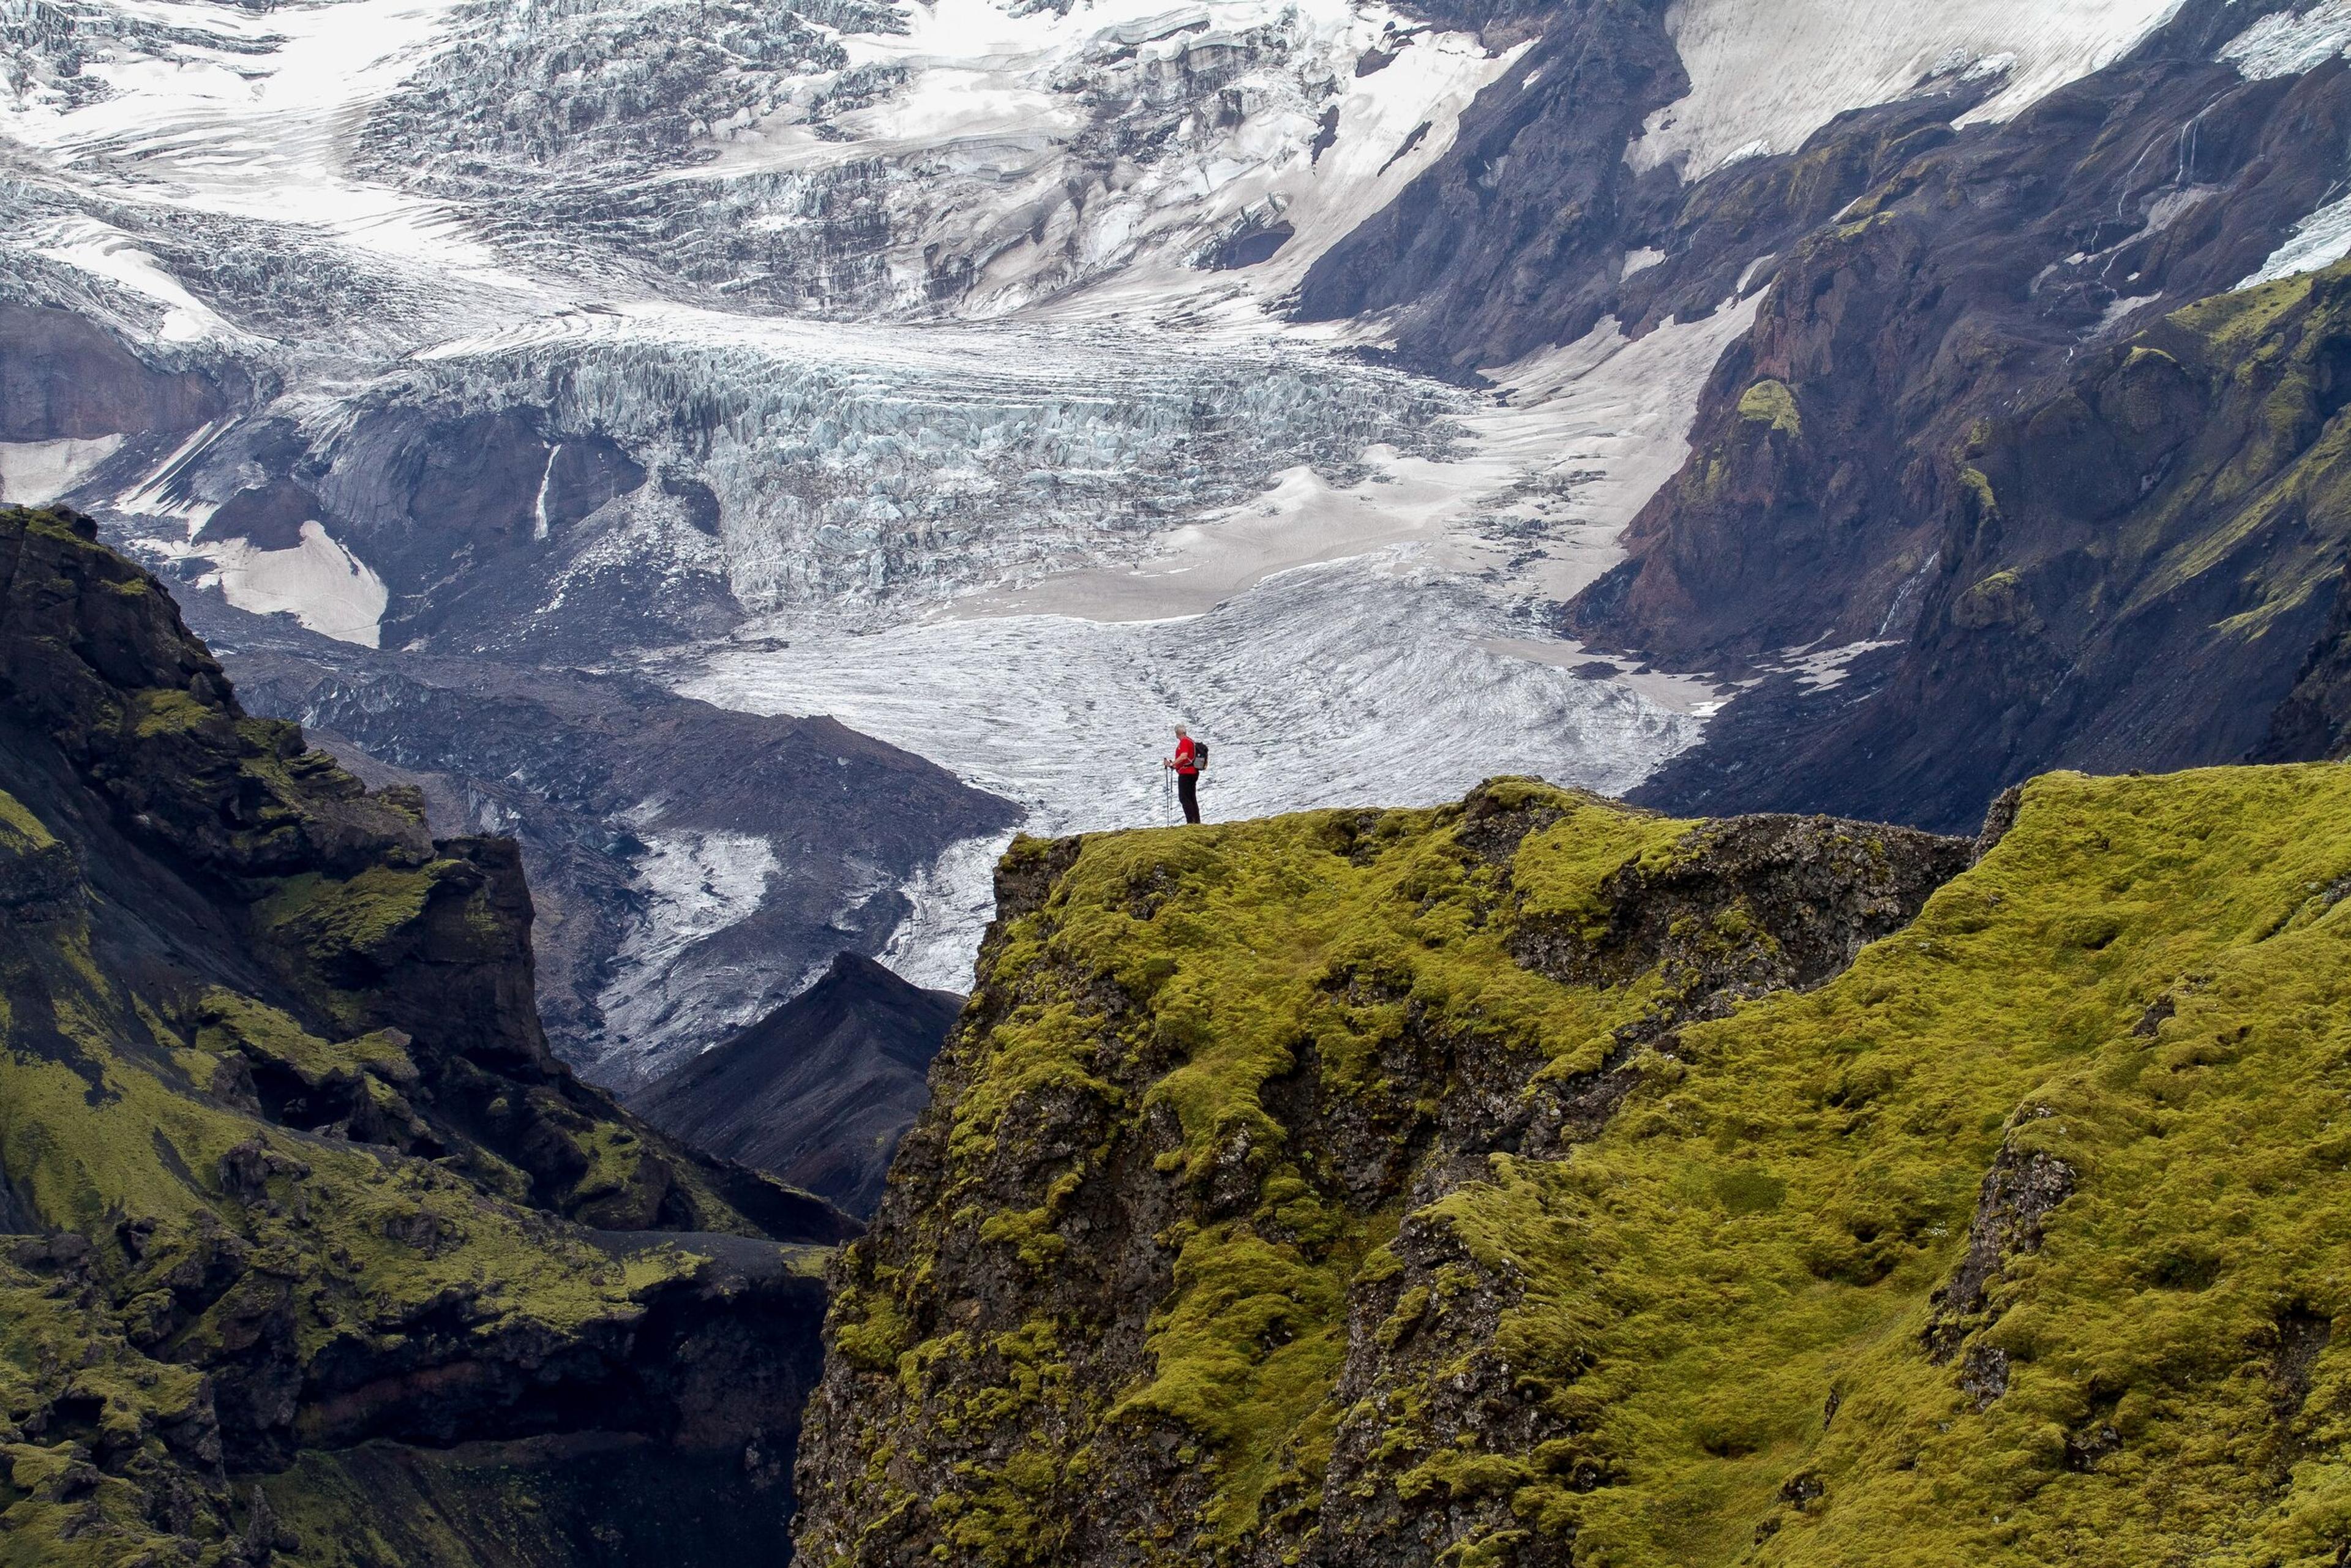 Hiker embarking on the challenging Fimmvörðuháls Trail, showcasing Iceland's rugged highlands